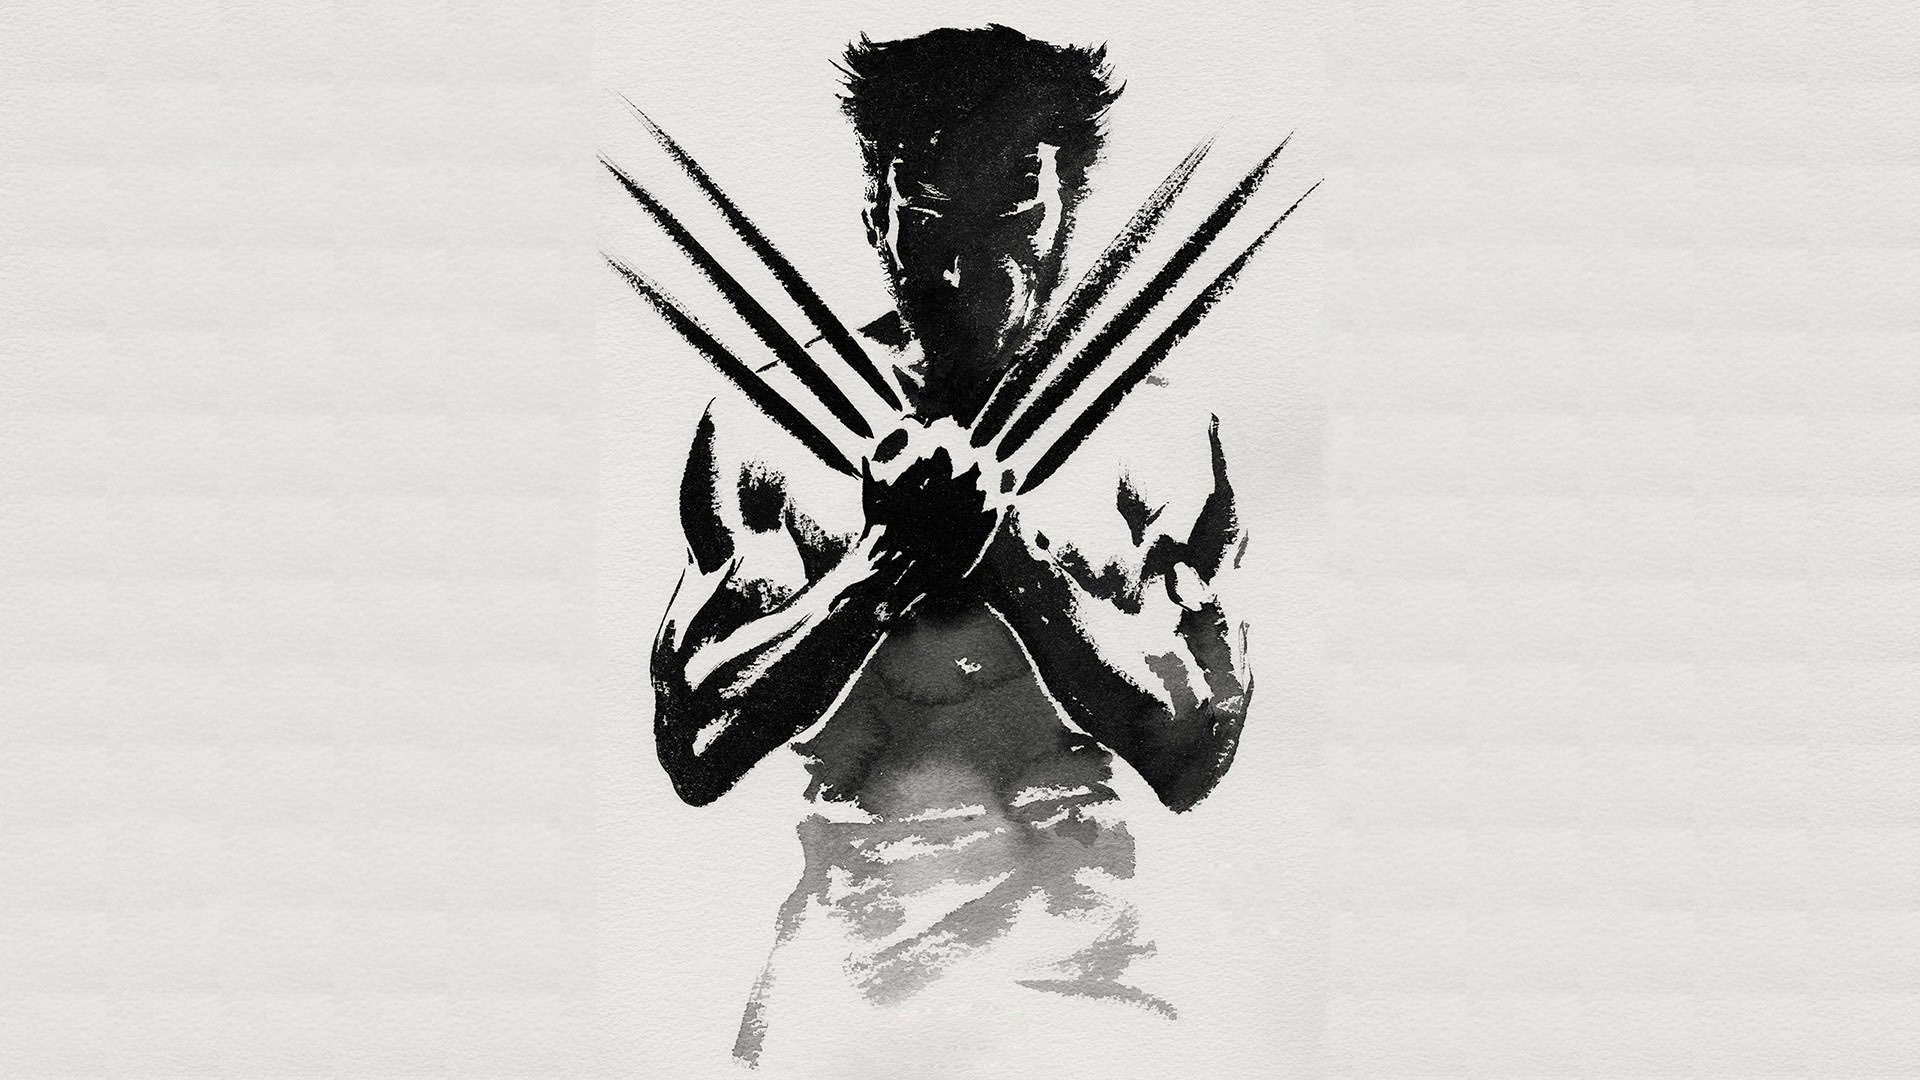 Wallpaper Details File Name Wolverine Uploaded By Lan Date